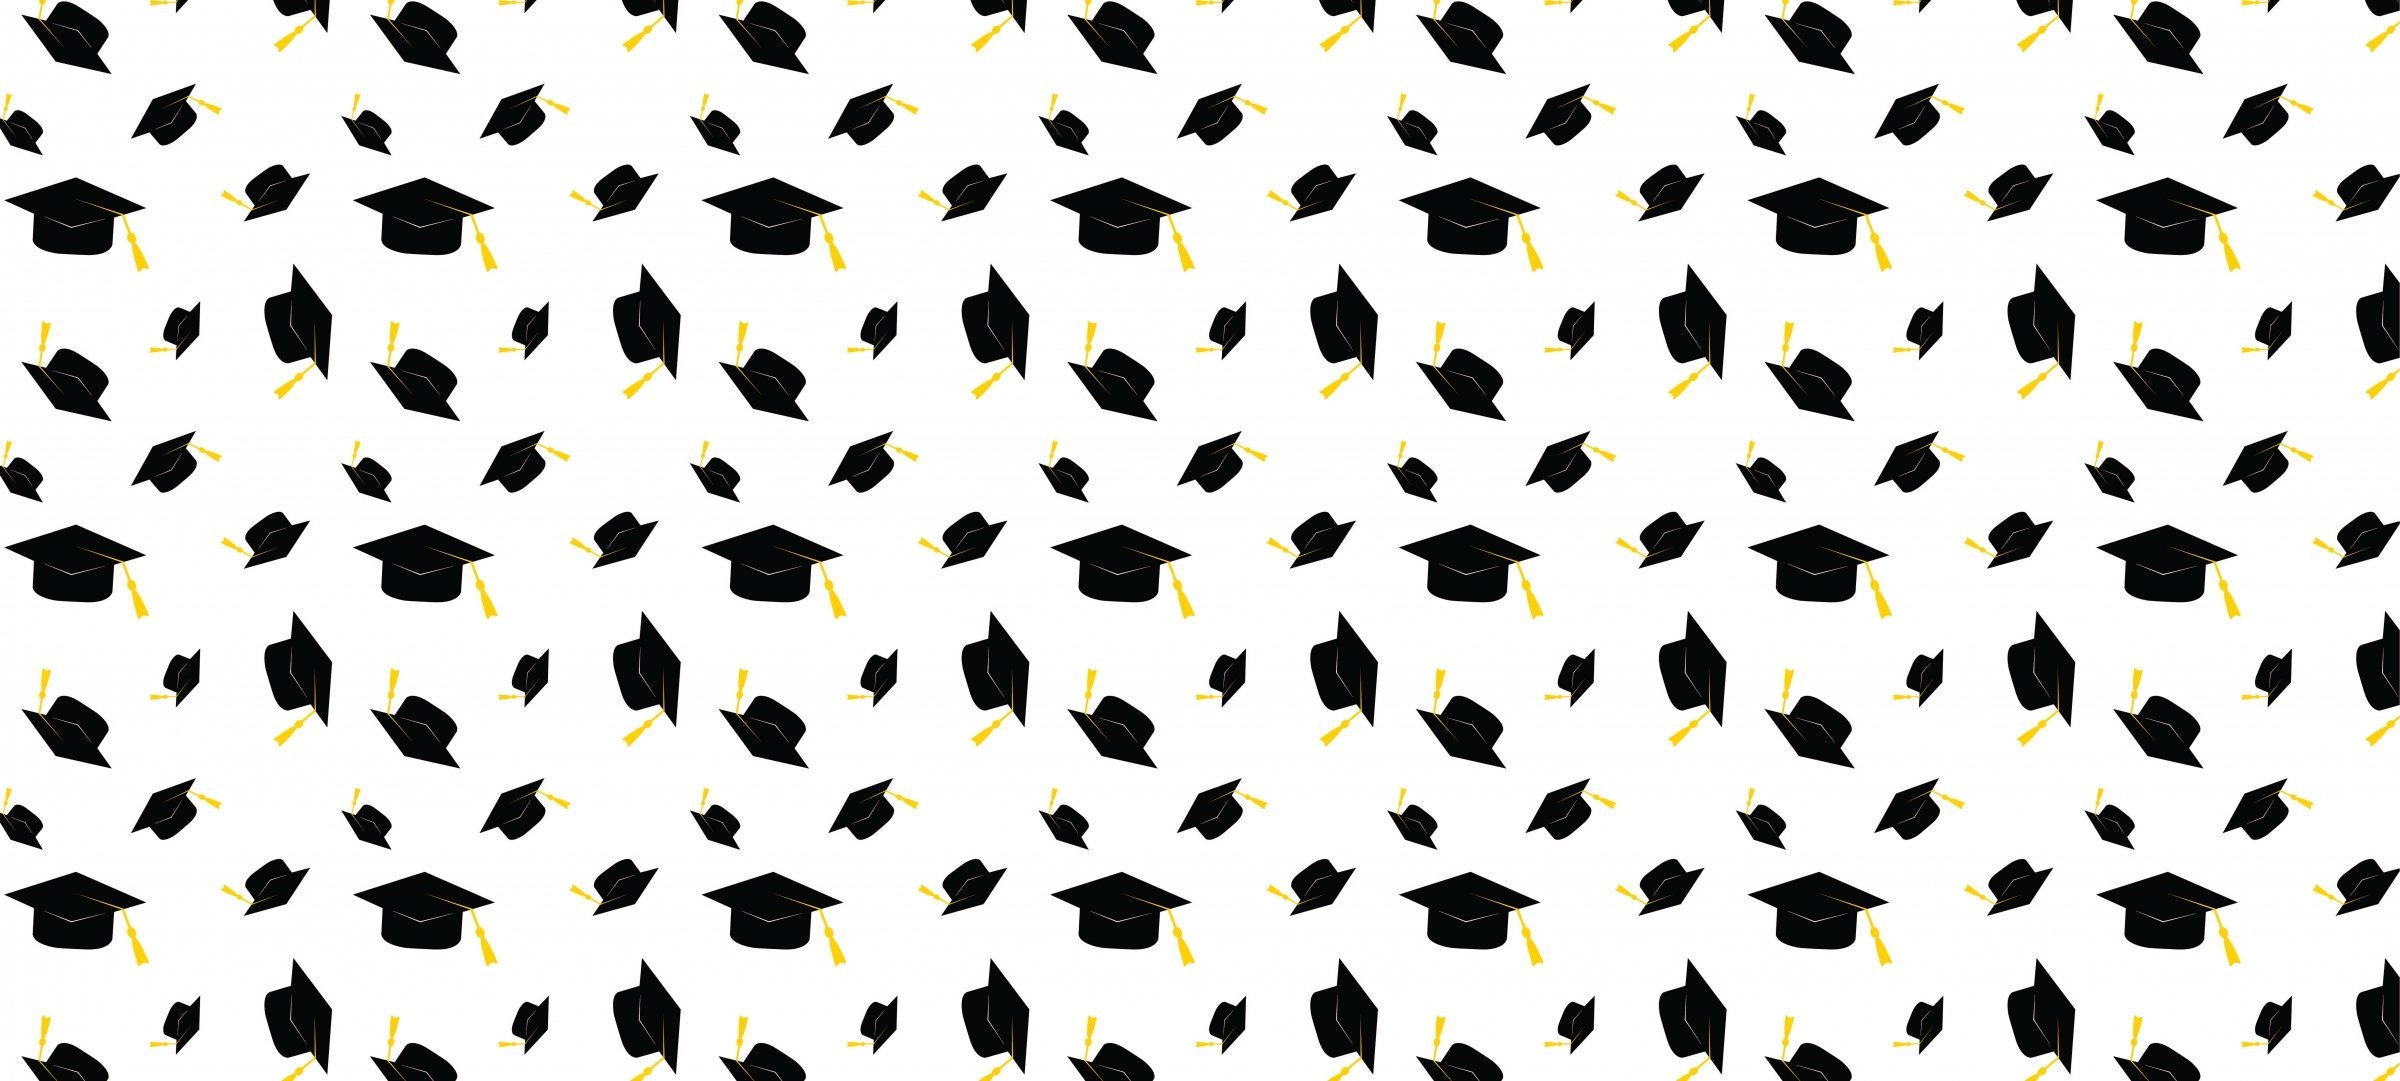 repeating graduation cap pattern